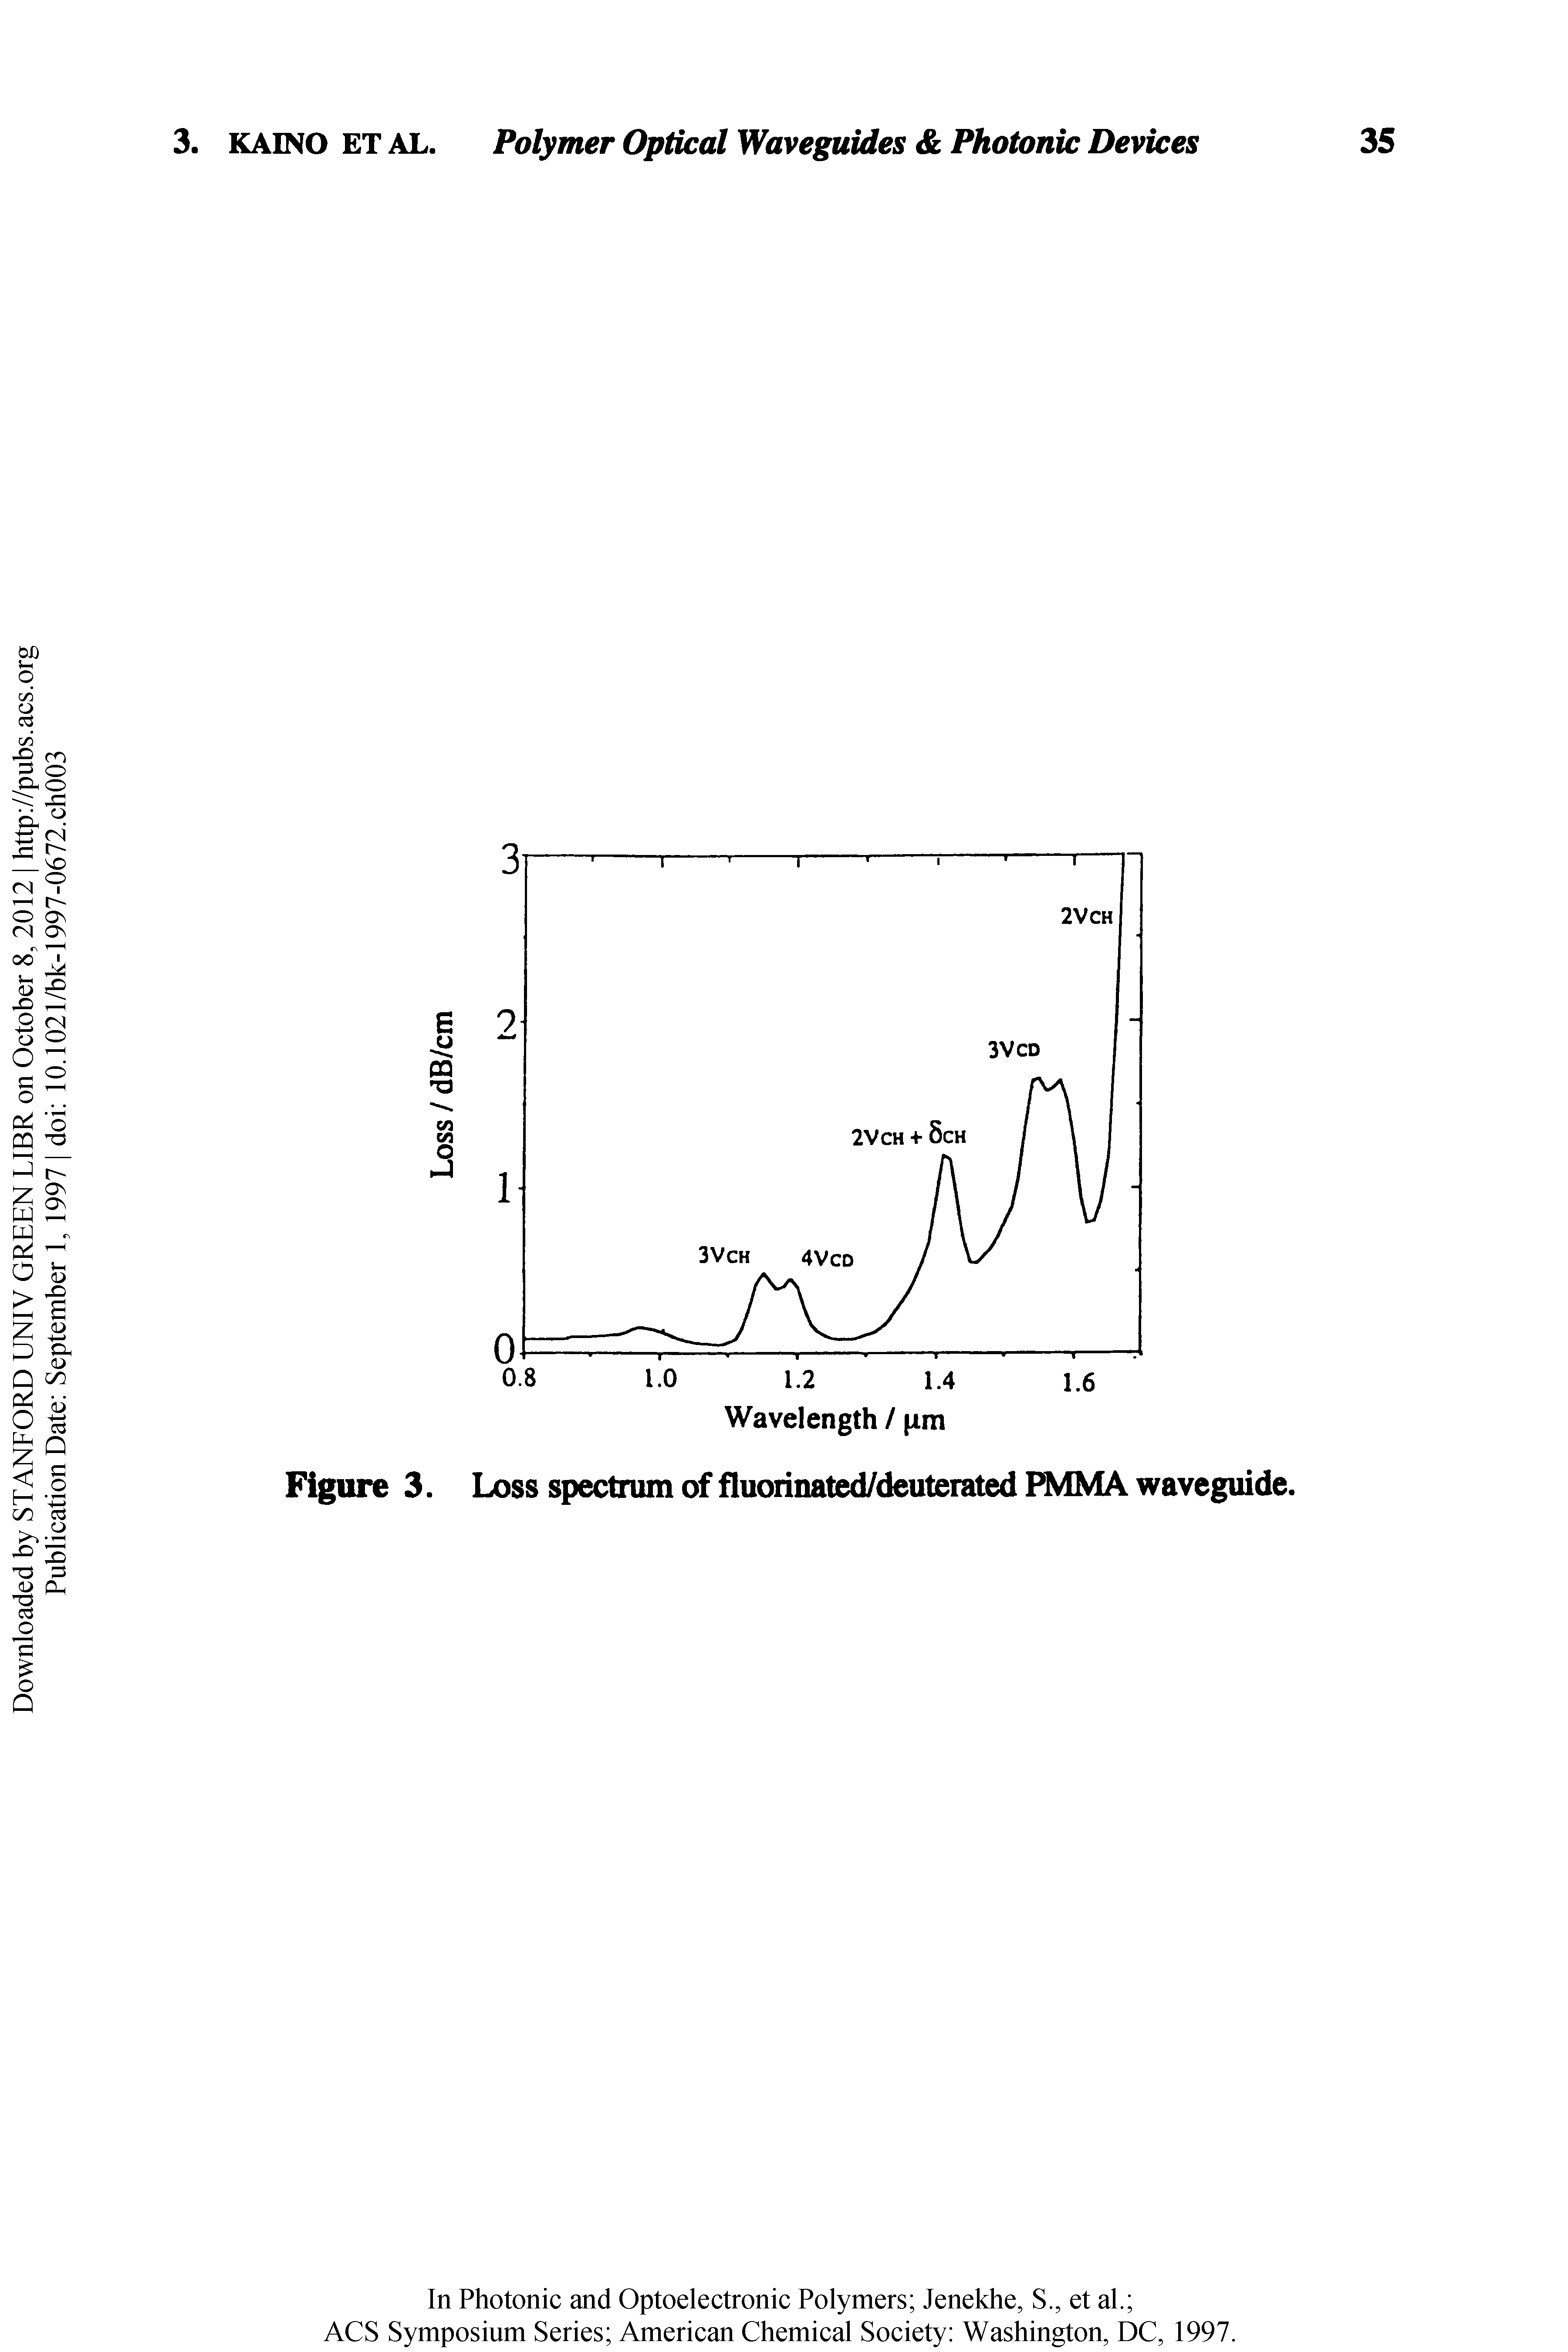 Figure 3. Loss spectrum of fluorinated/deuterated PMMA waveguide.